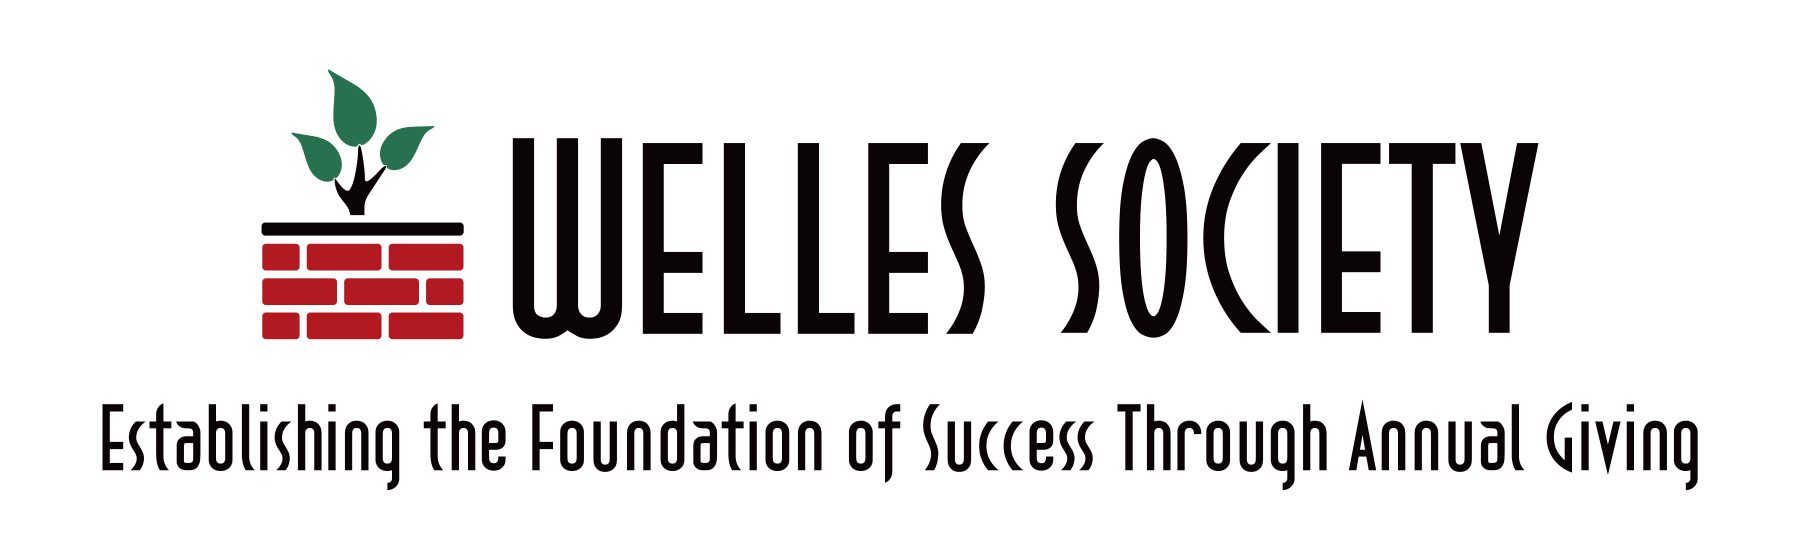 Welles Society logo